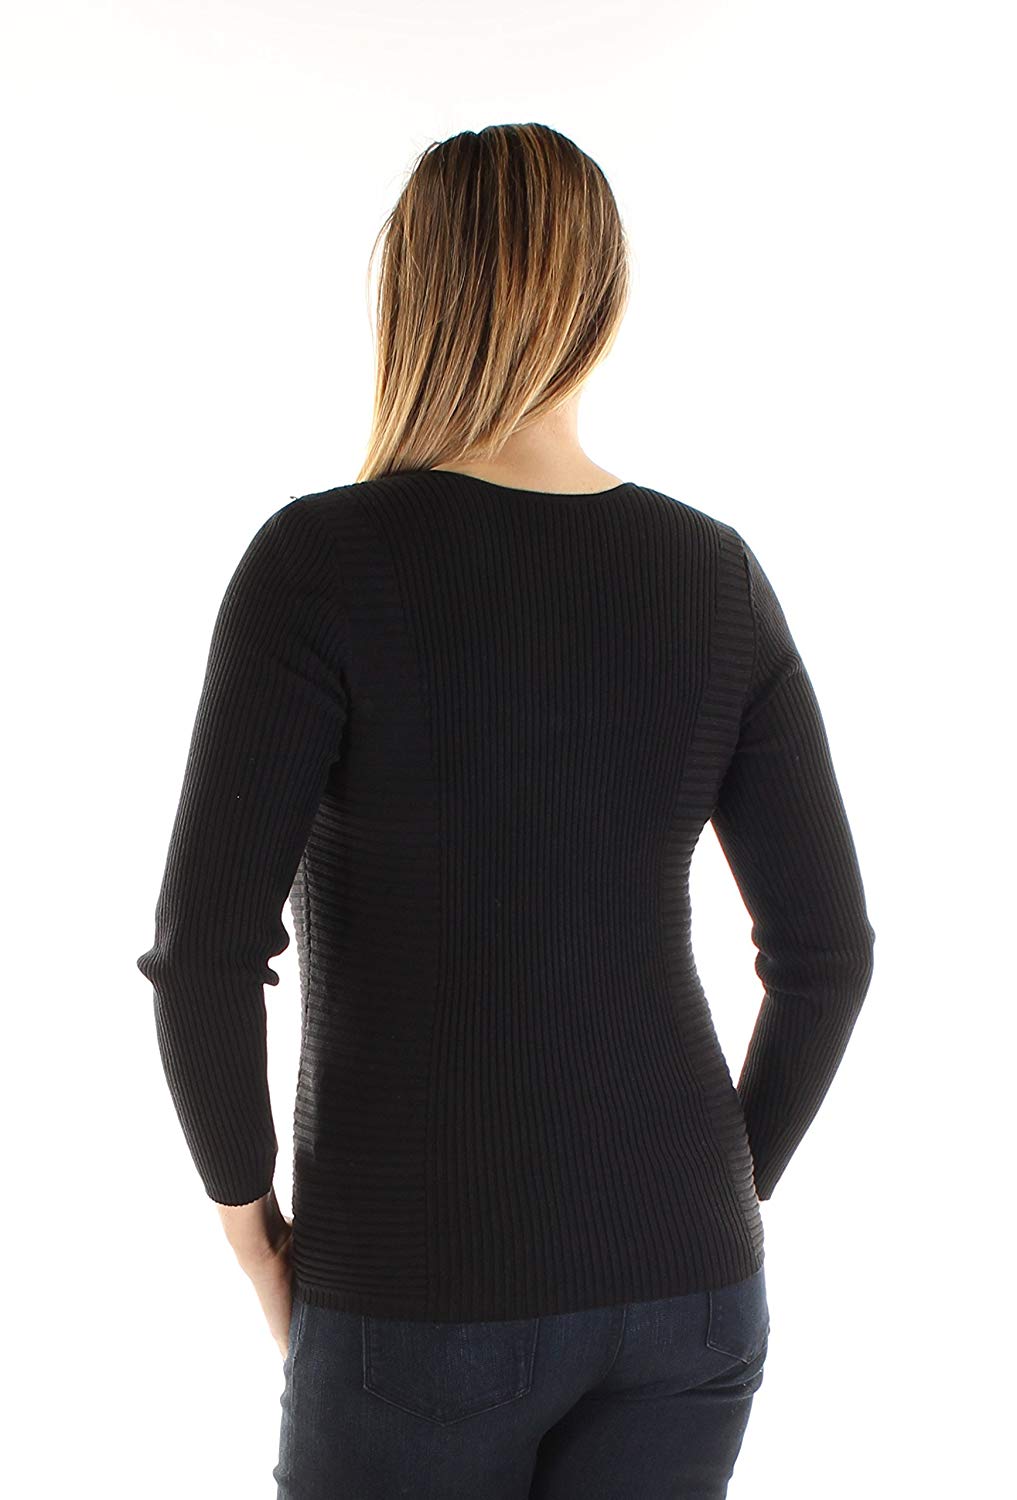 INC Womens Petites Office Wear Knit V-Neck Sweater Black PL